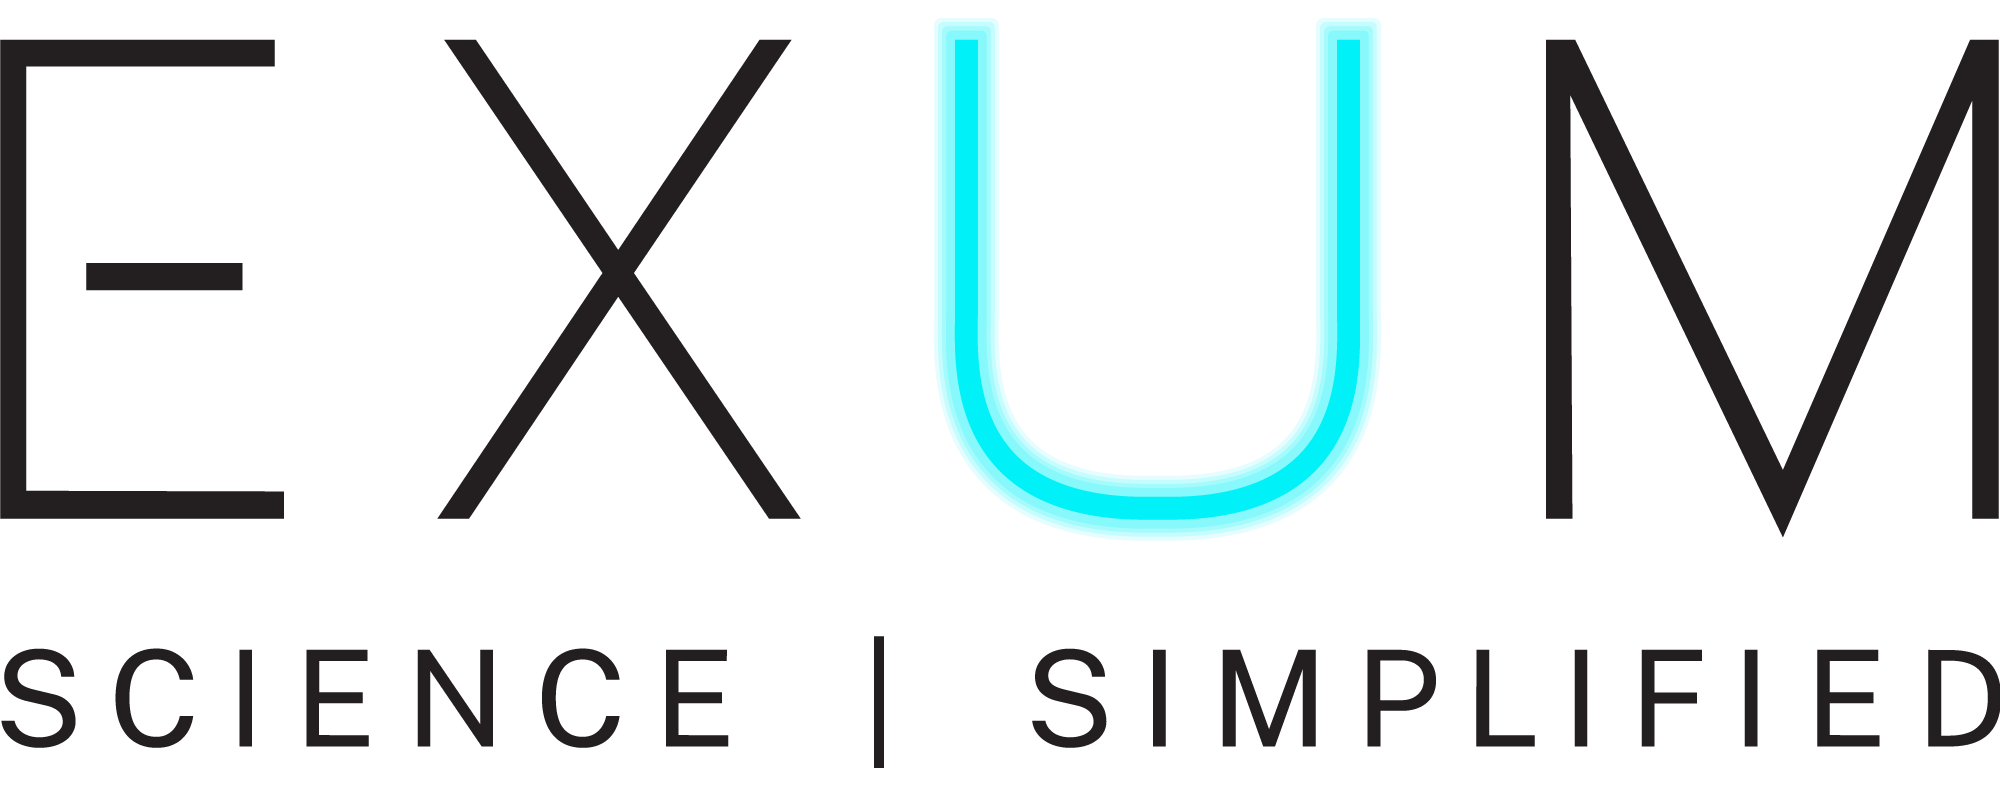 Exum Instruments Logo